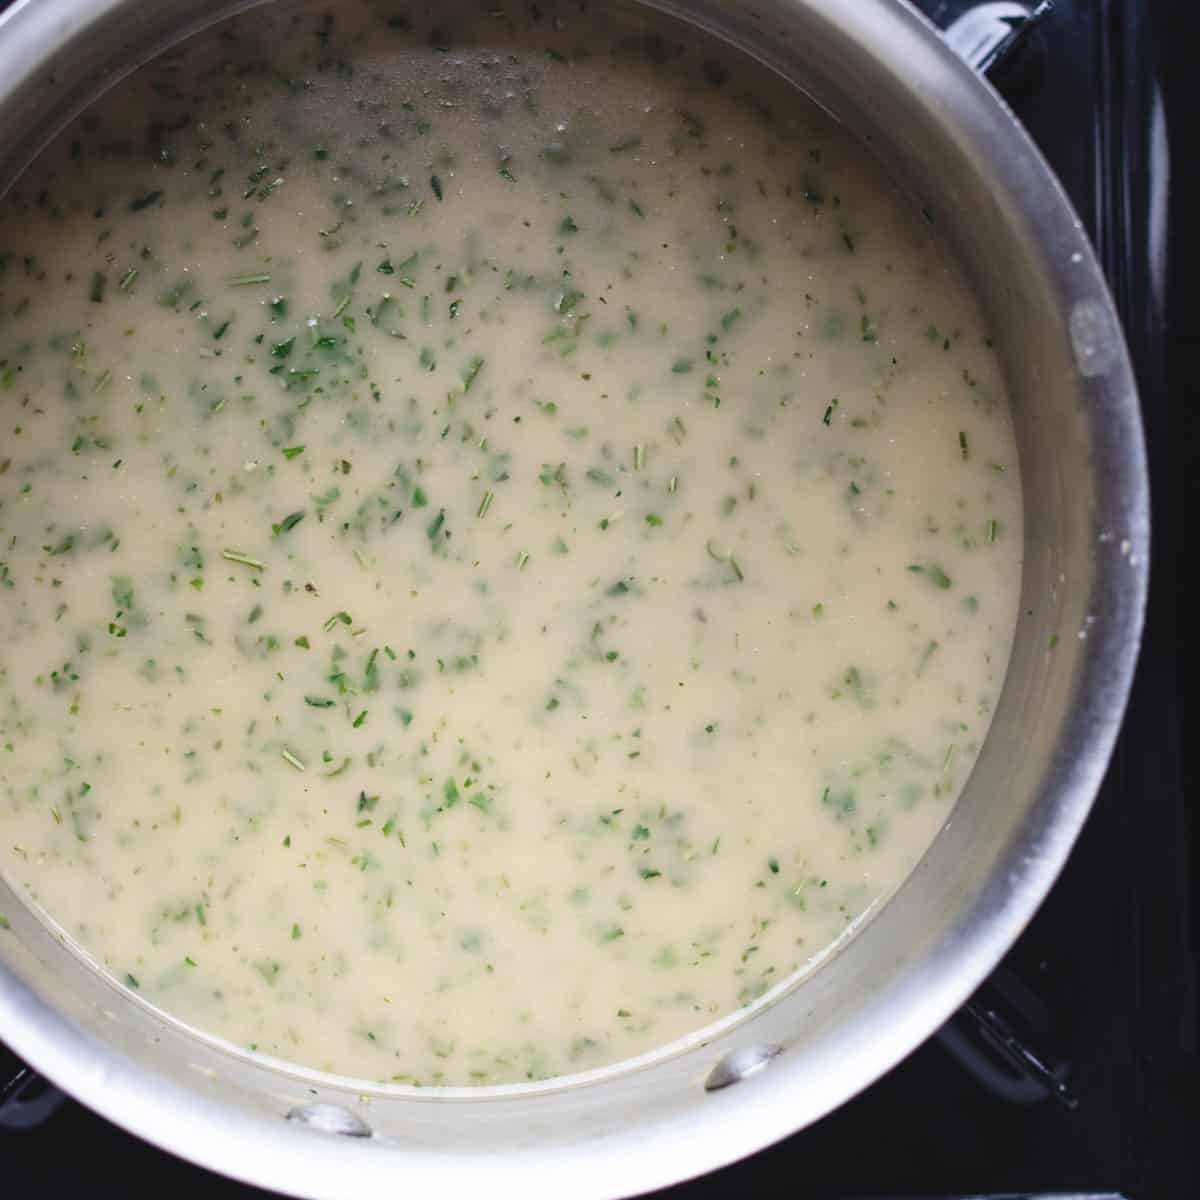 Turkey gravy in a saucepan.